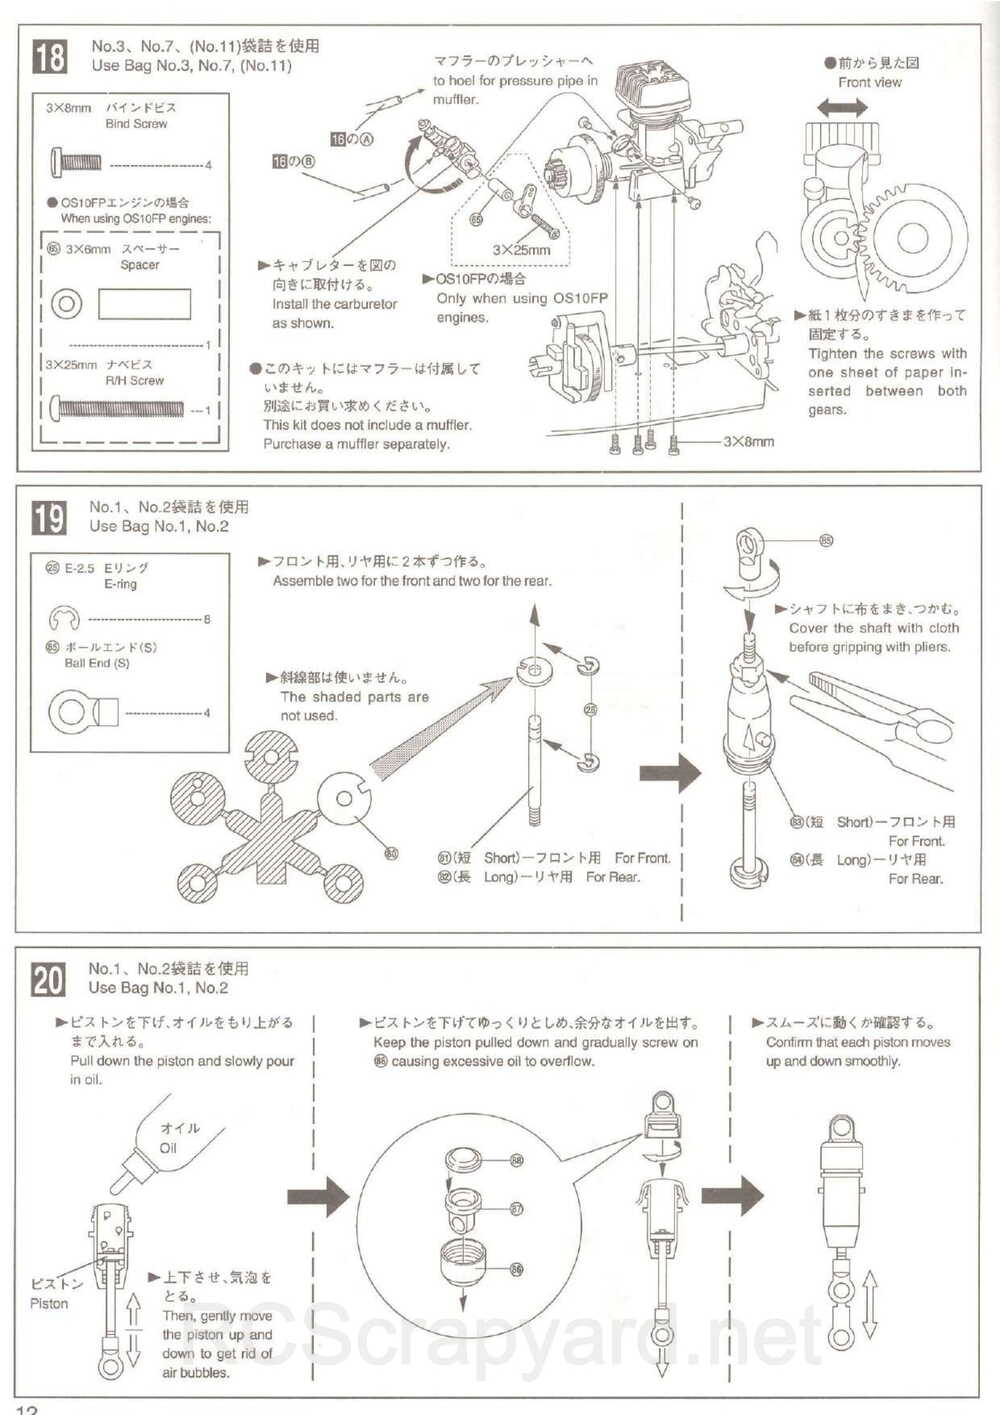 Kyosho - 31345 - Inferno 10 - Manual - Page 12